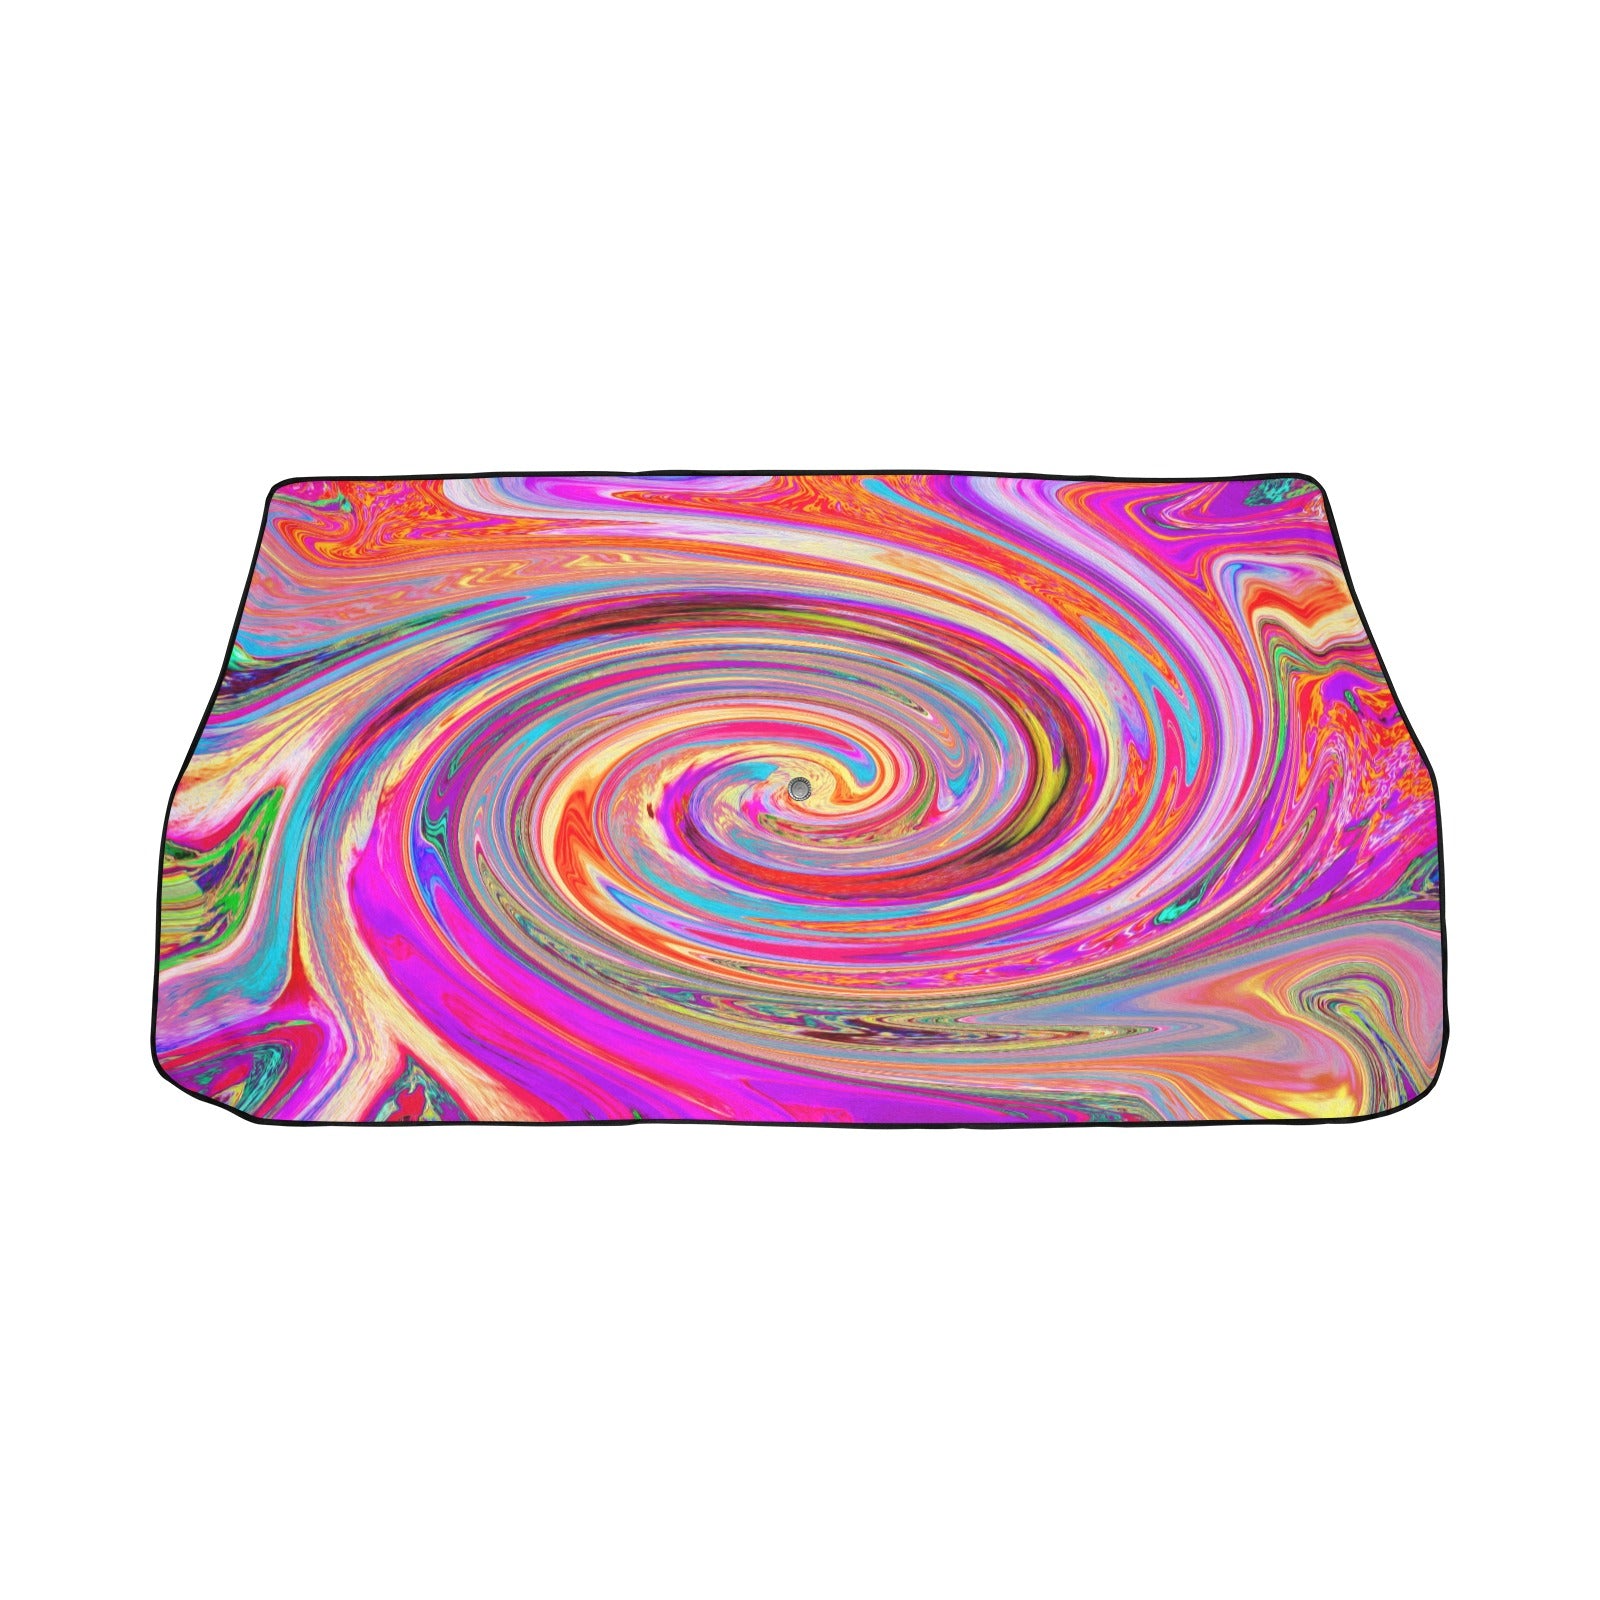 Car Umbrella Sunshades, Colorful Rainbow Swirl Retro Abstract Design